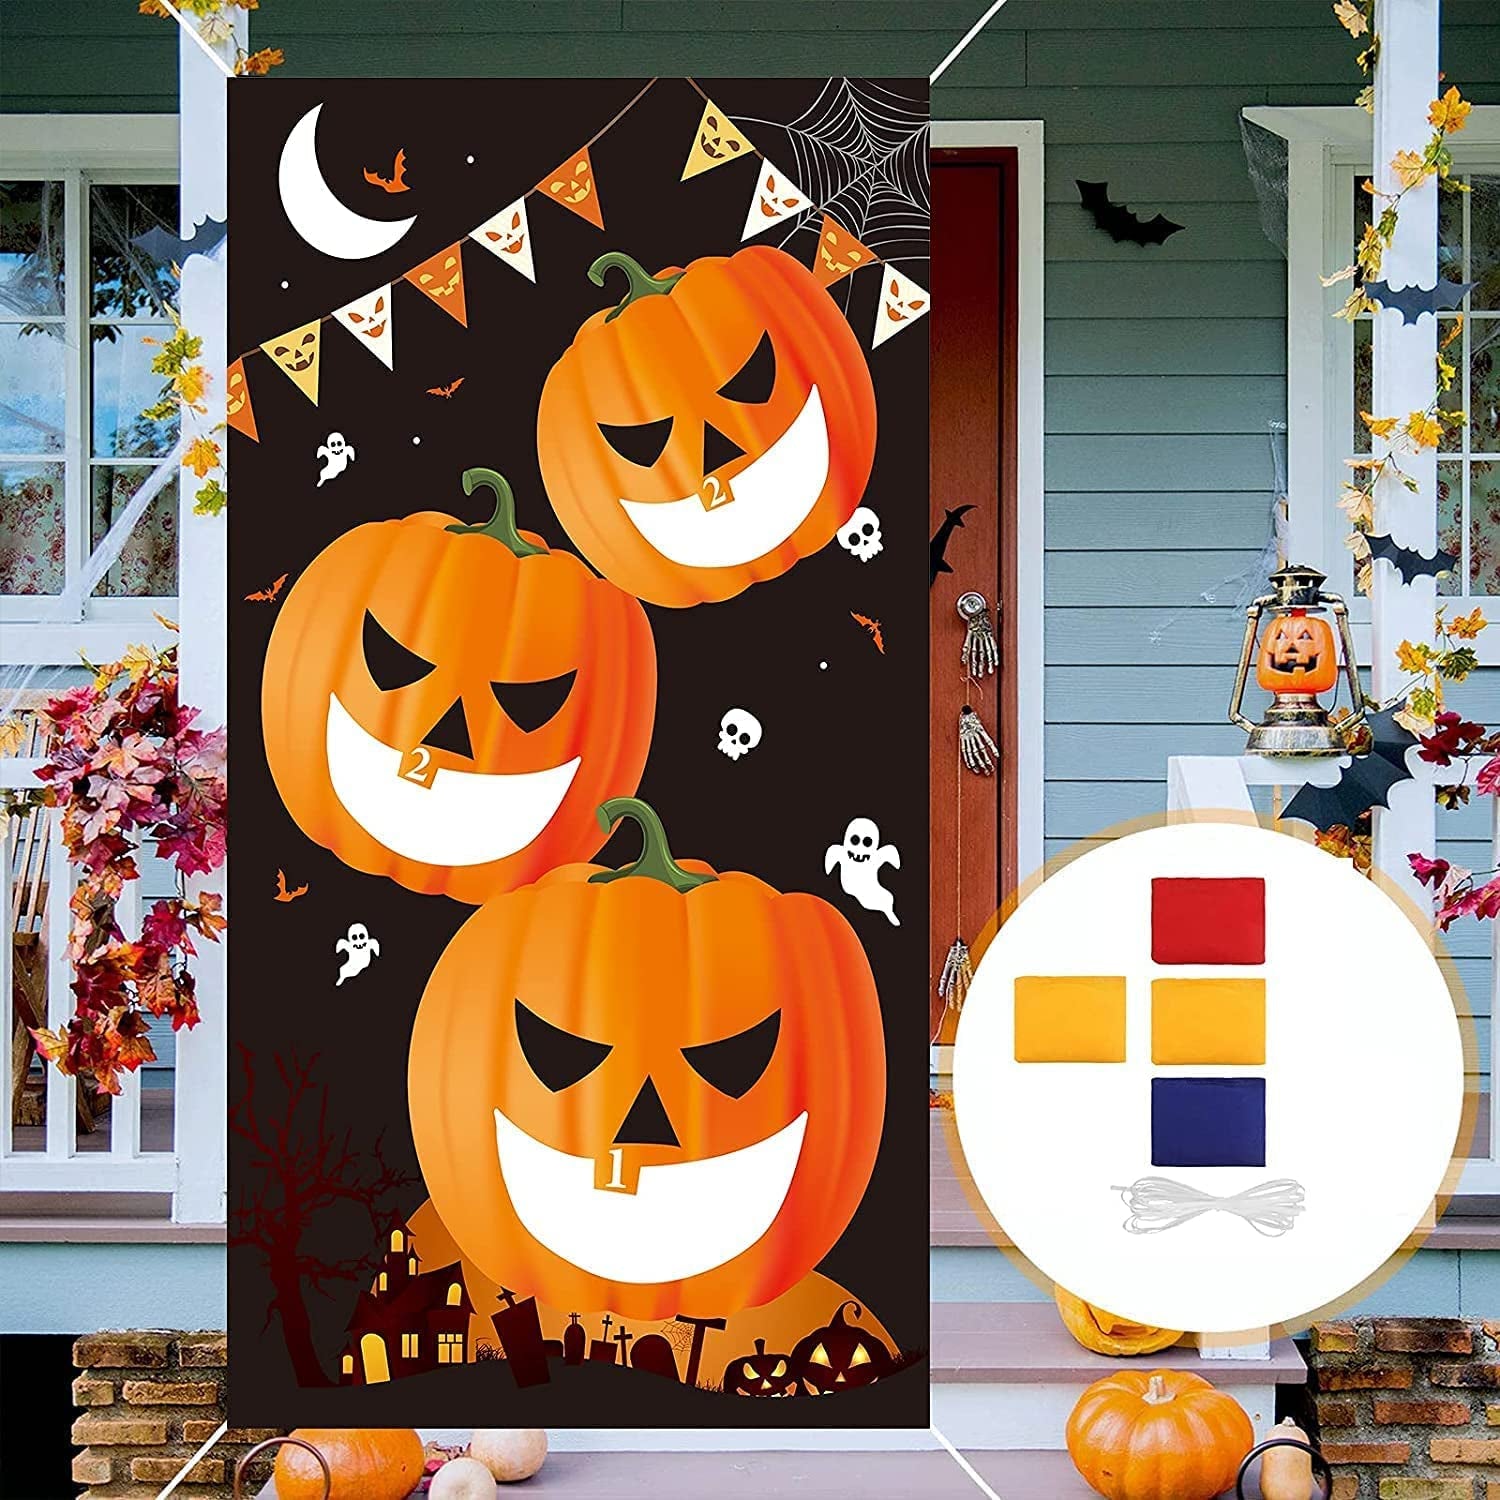 KINMRIS, KINMRIS Pumpkin Bean Bag Toss Games + 3 Bean Bags, Halloween Games for Kids Party Halloween Decorations